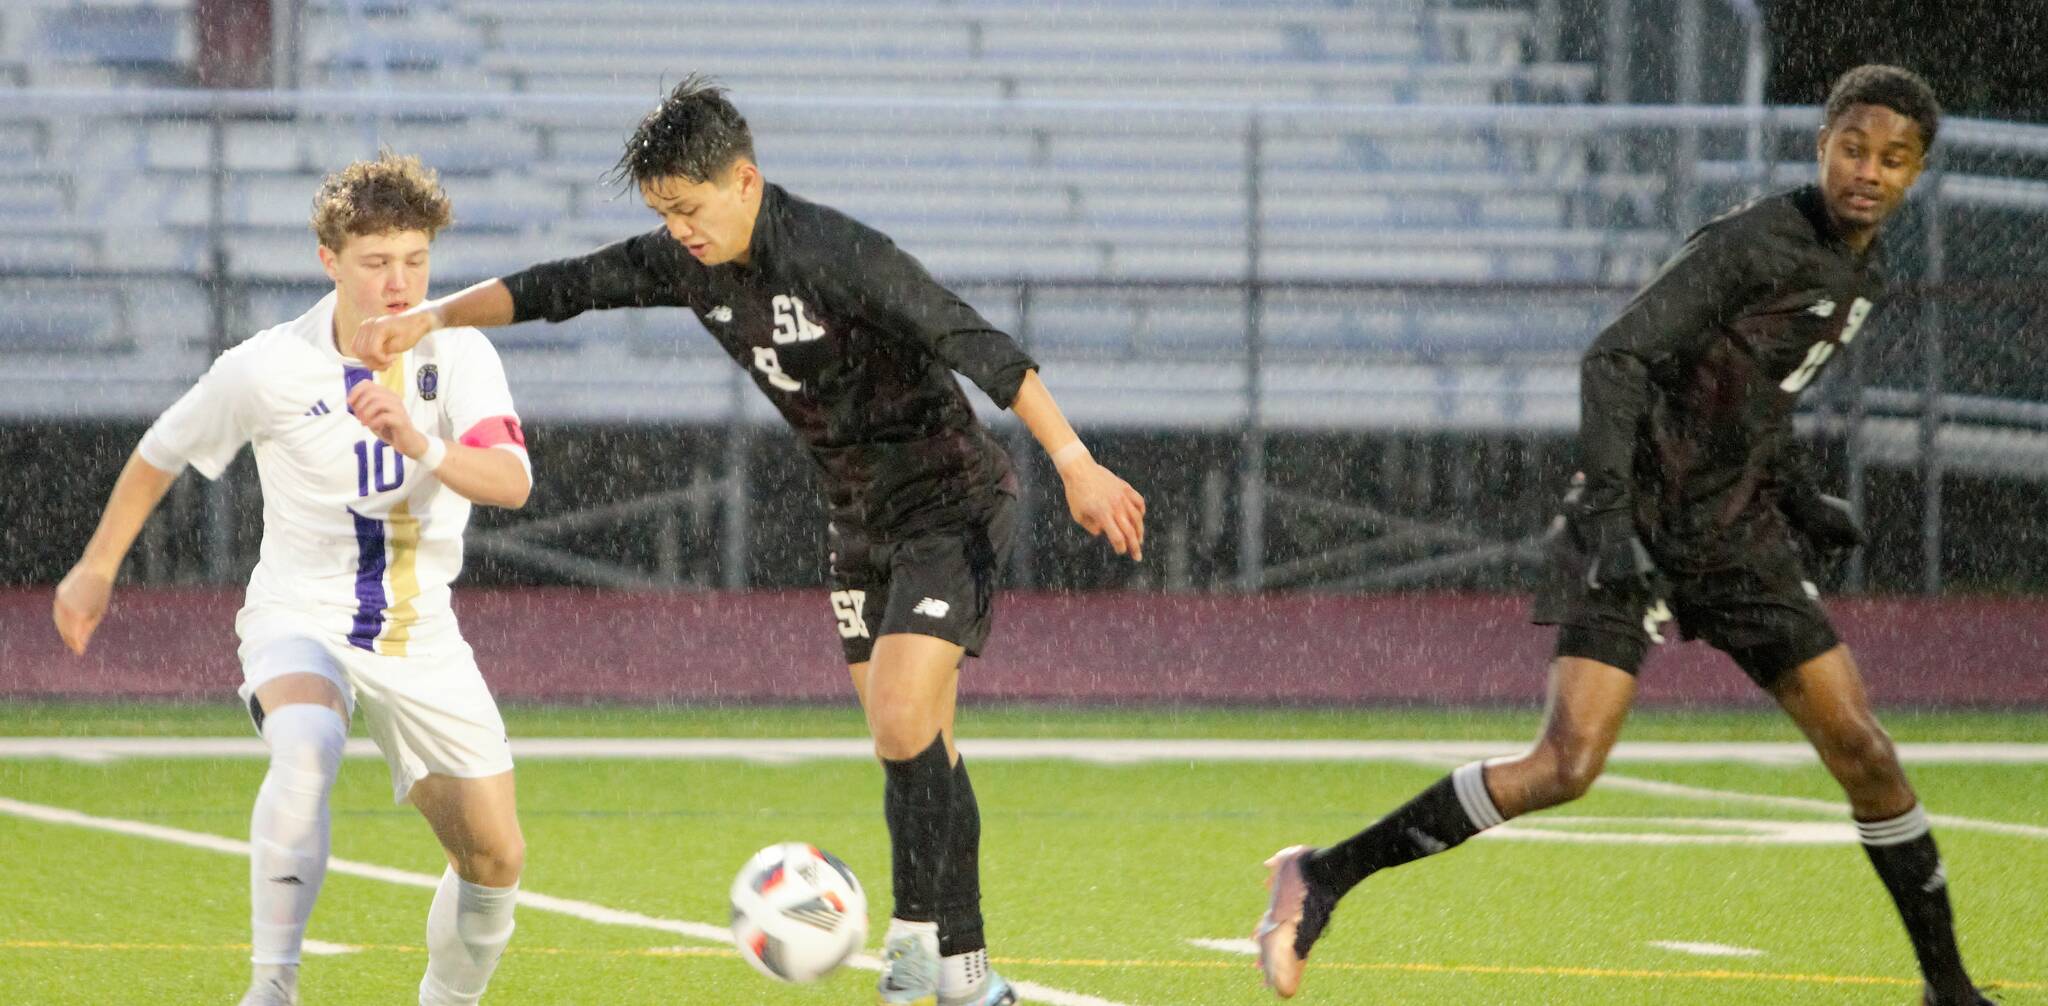 Rain persists as South Kitsap junior Gabriel Fernandez works to keep the ball moving through Sumner’s defense. Elisha Meyer/Kitsap News Group Photos